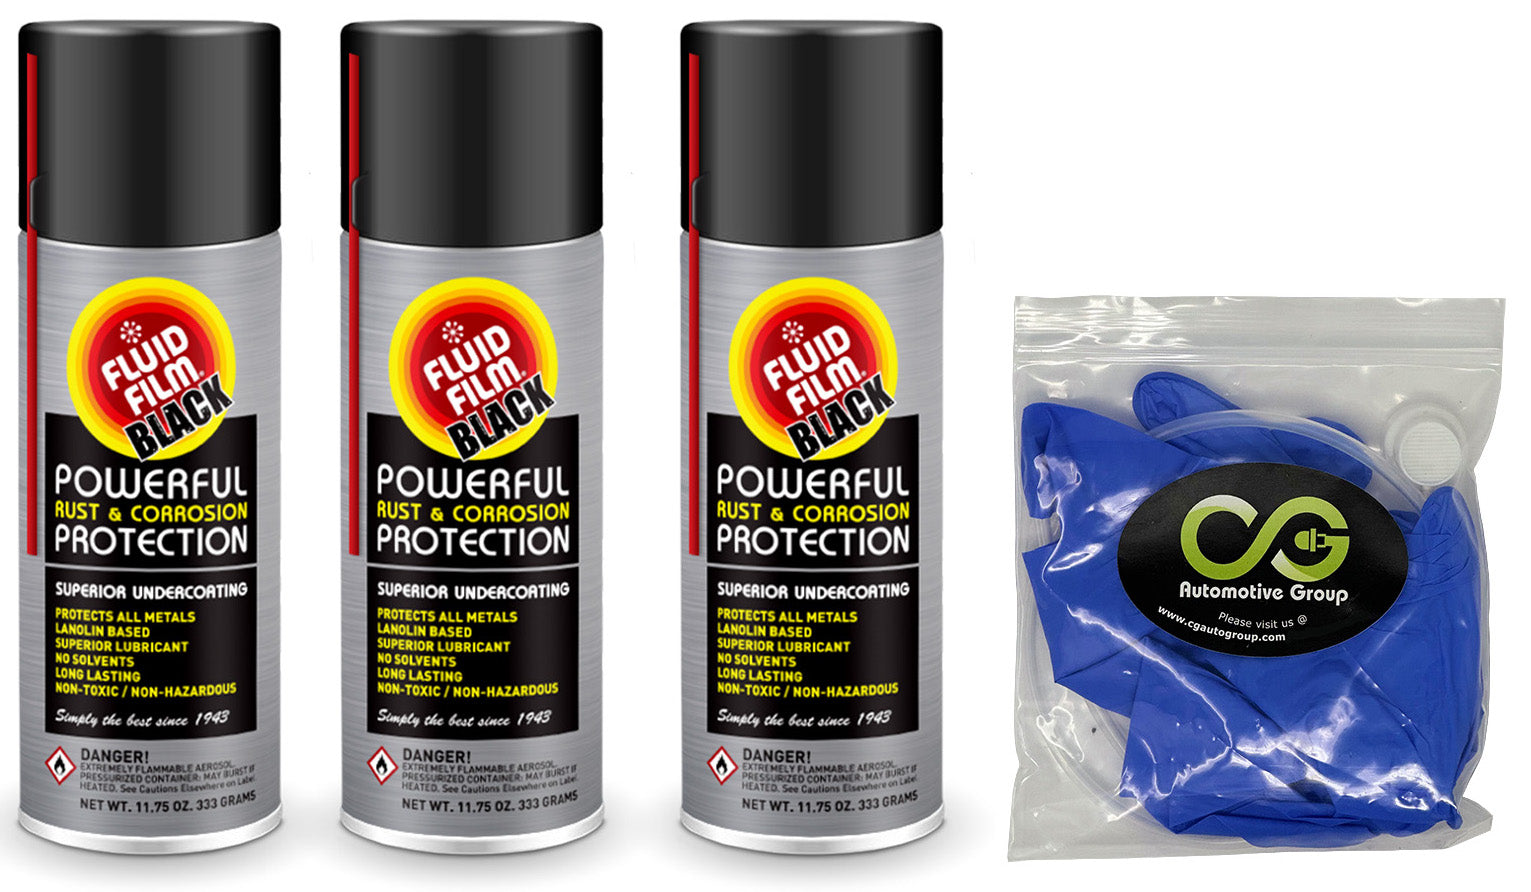 Fluid Film Black, 3 Pack, 35.25 oz Undercoating Protection Aerosol